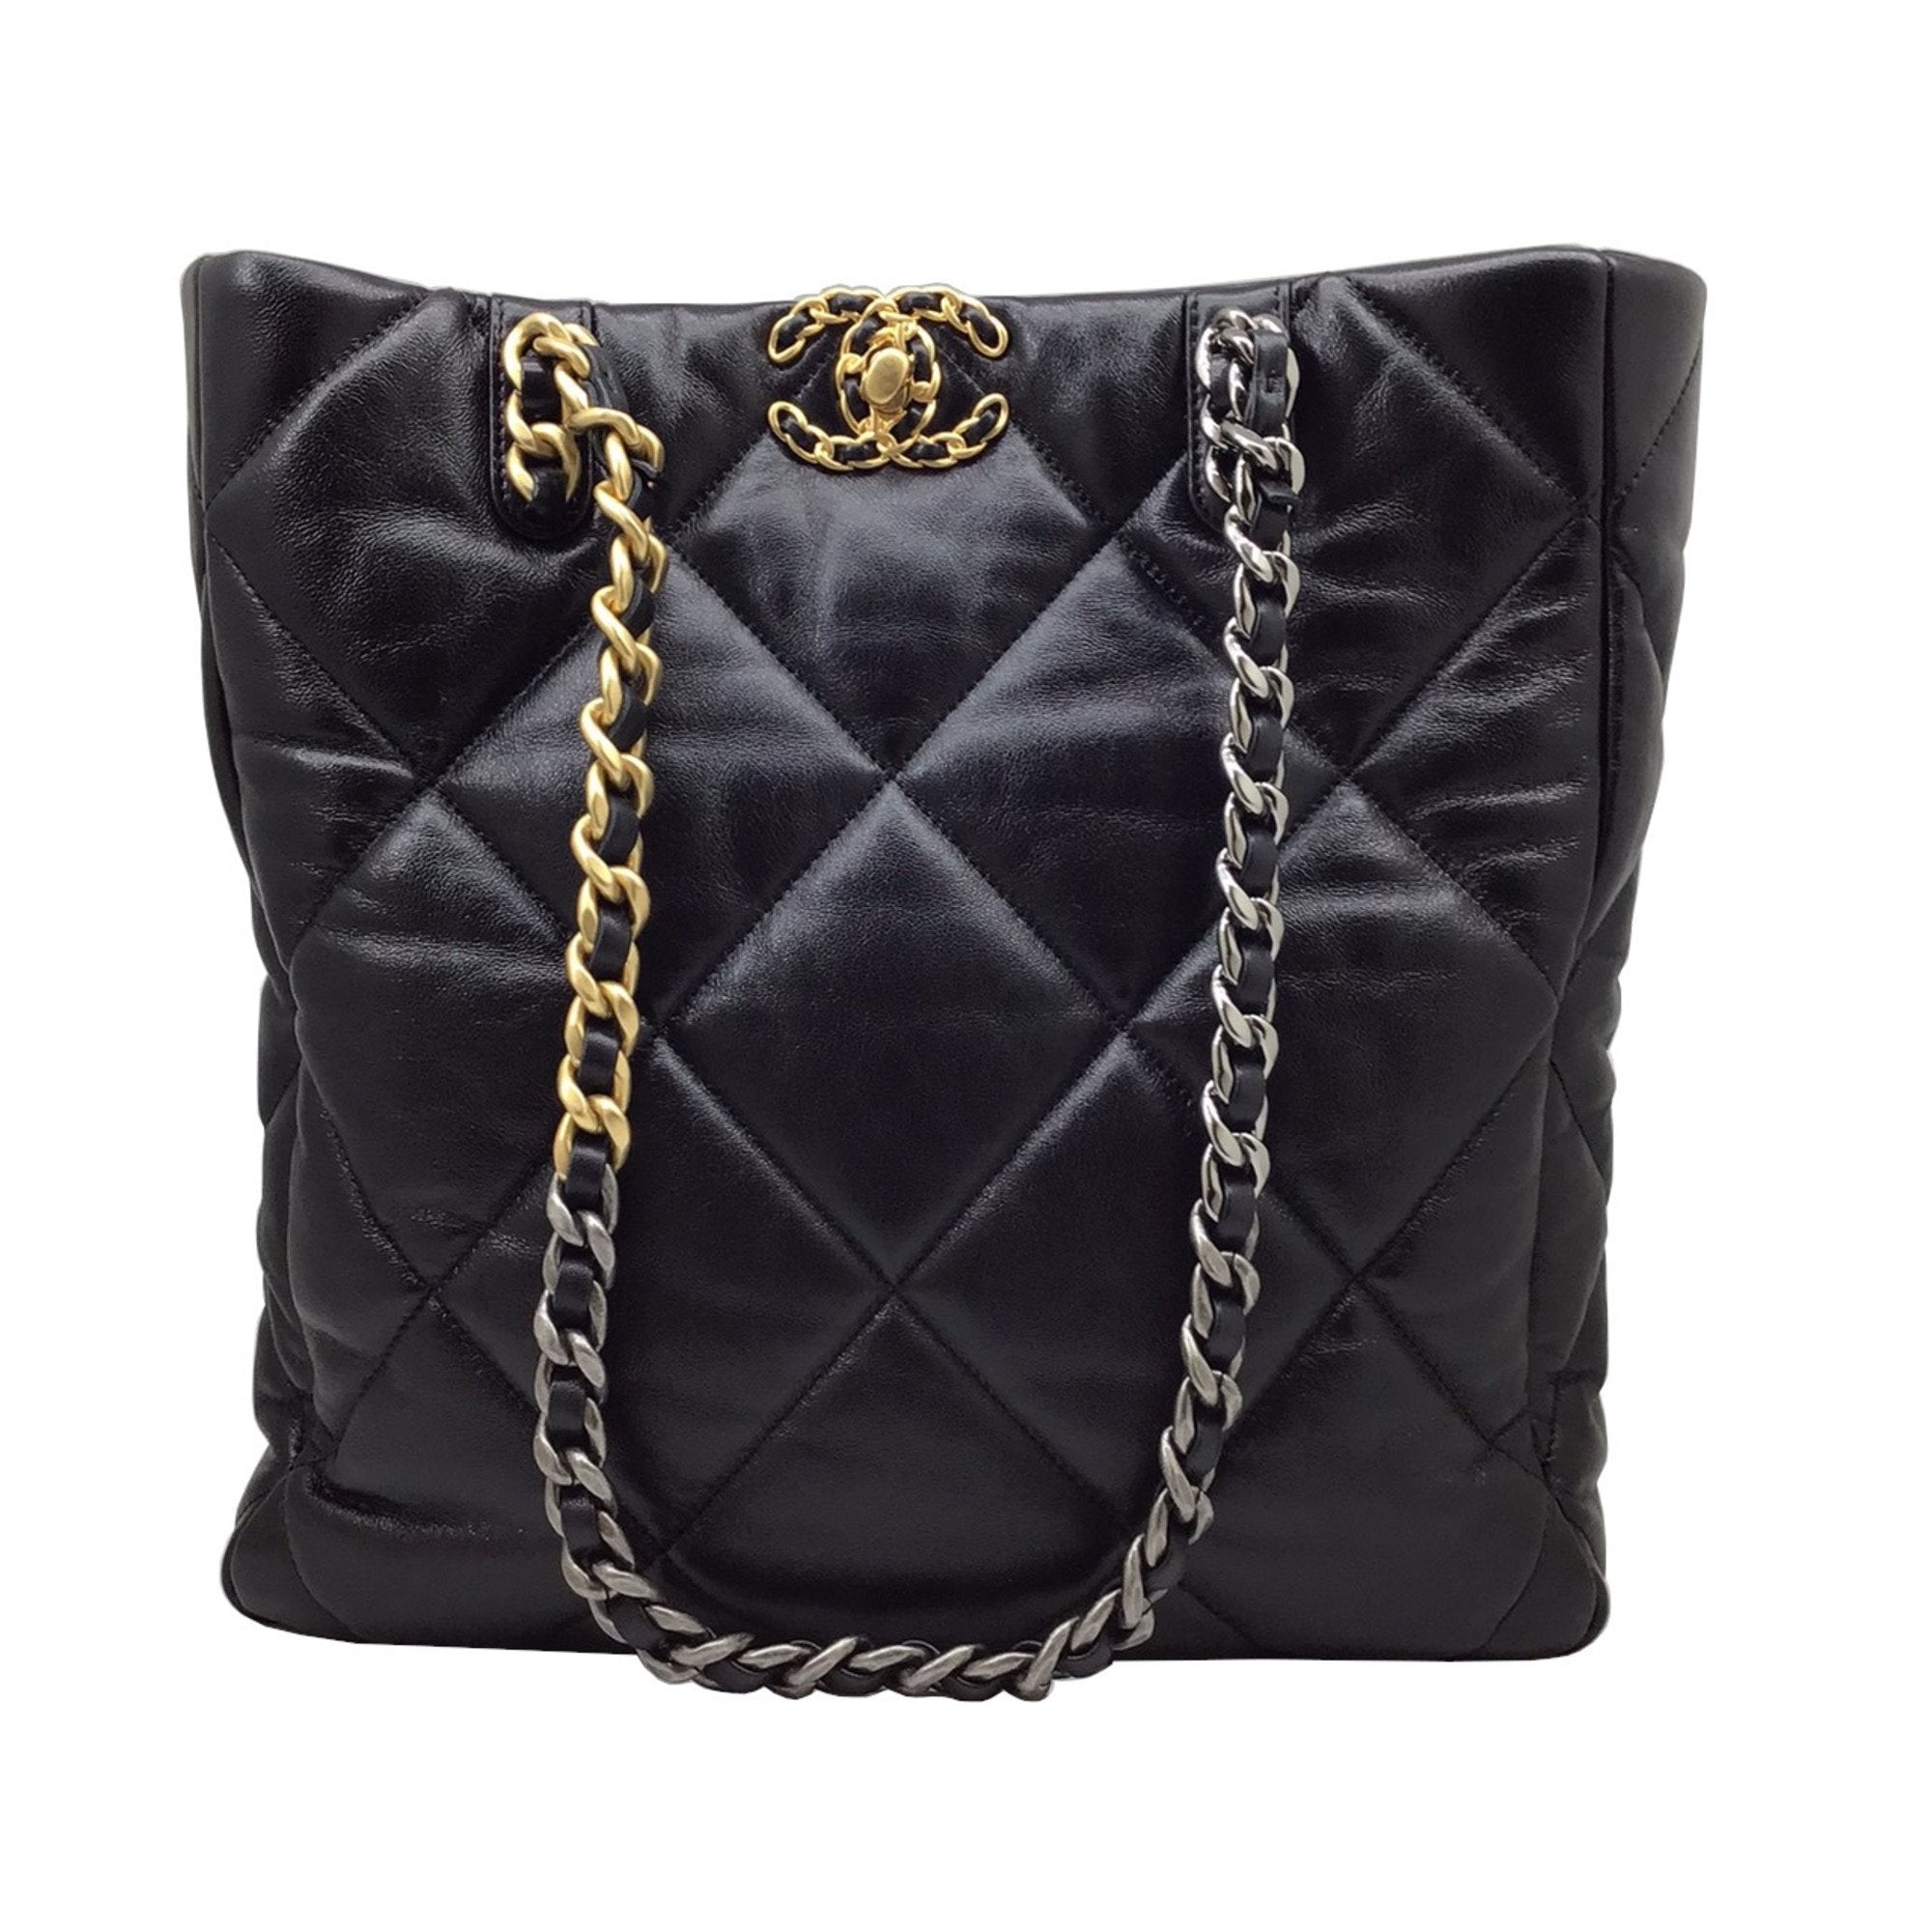 CHANEL Lamb Skin Leather Chocolate bar Black Handbag Tote bag #2493 Rise-on